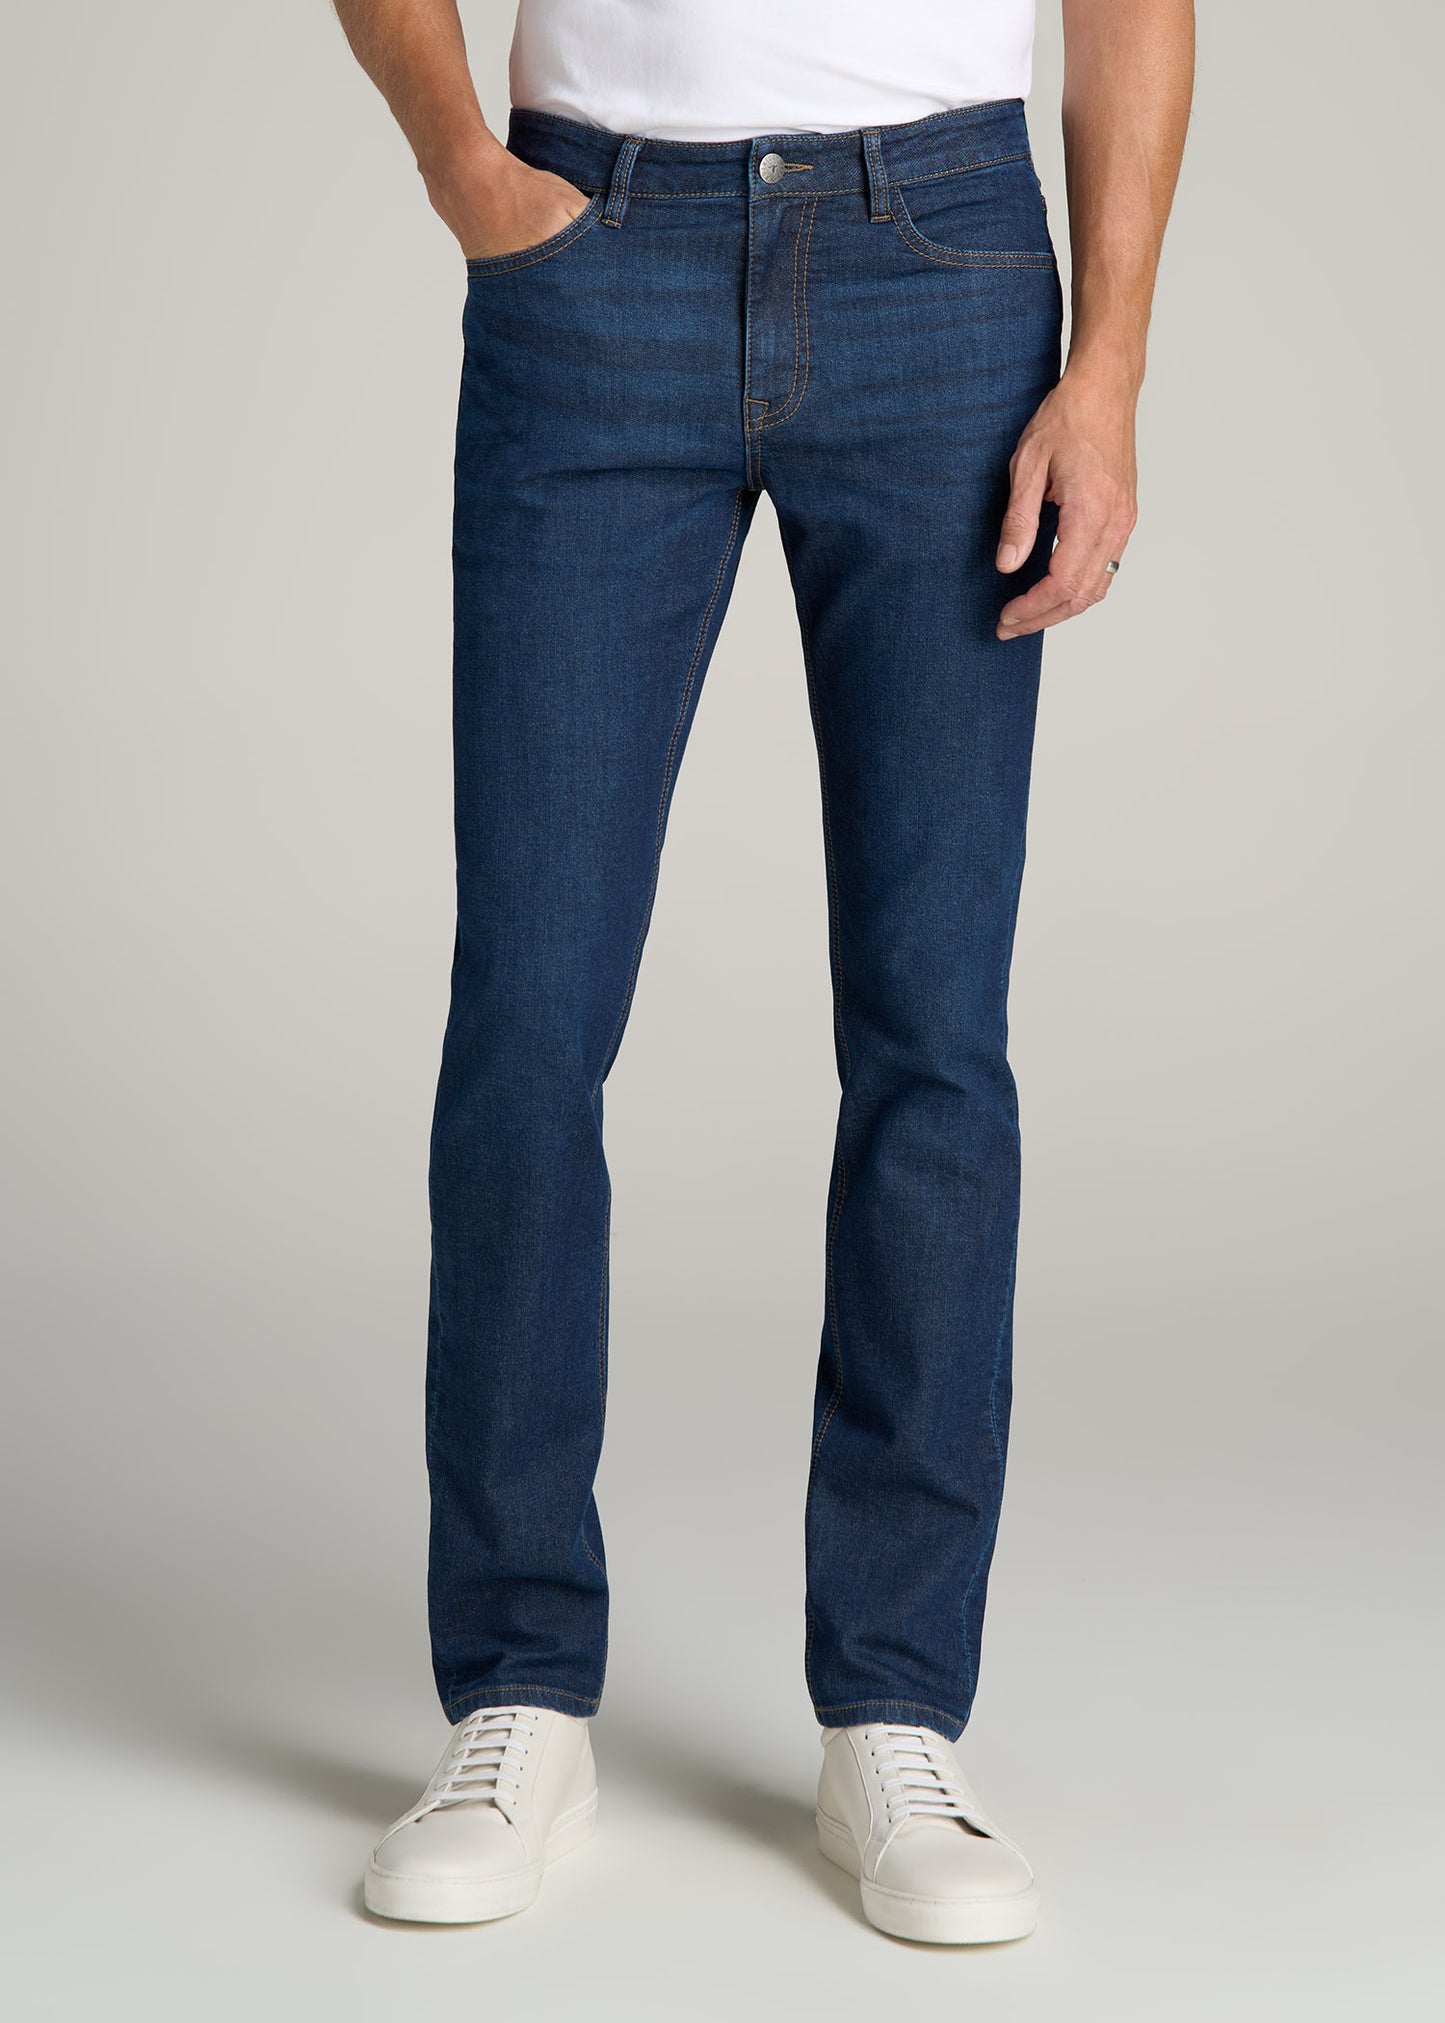 J Brand Kane Slim Straight Jeans Men's Size 36 Mid Rise Dark Wash